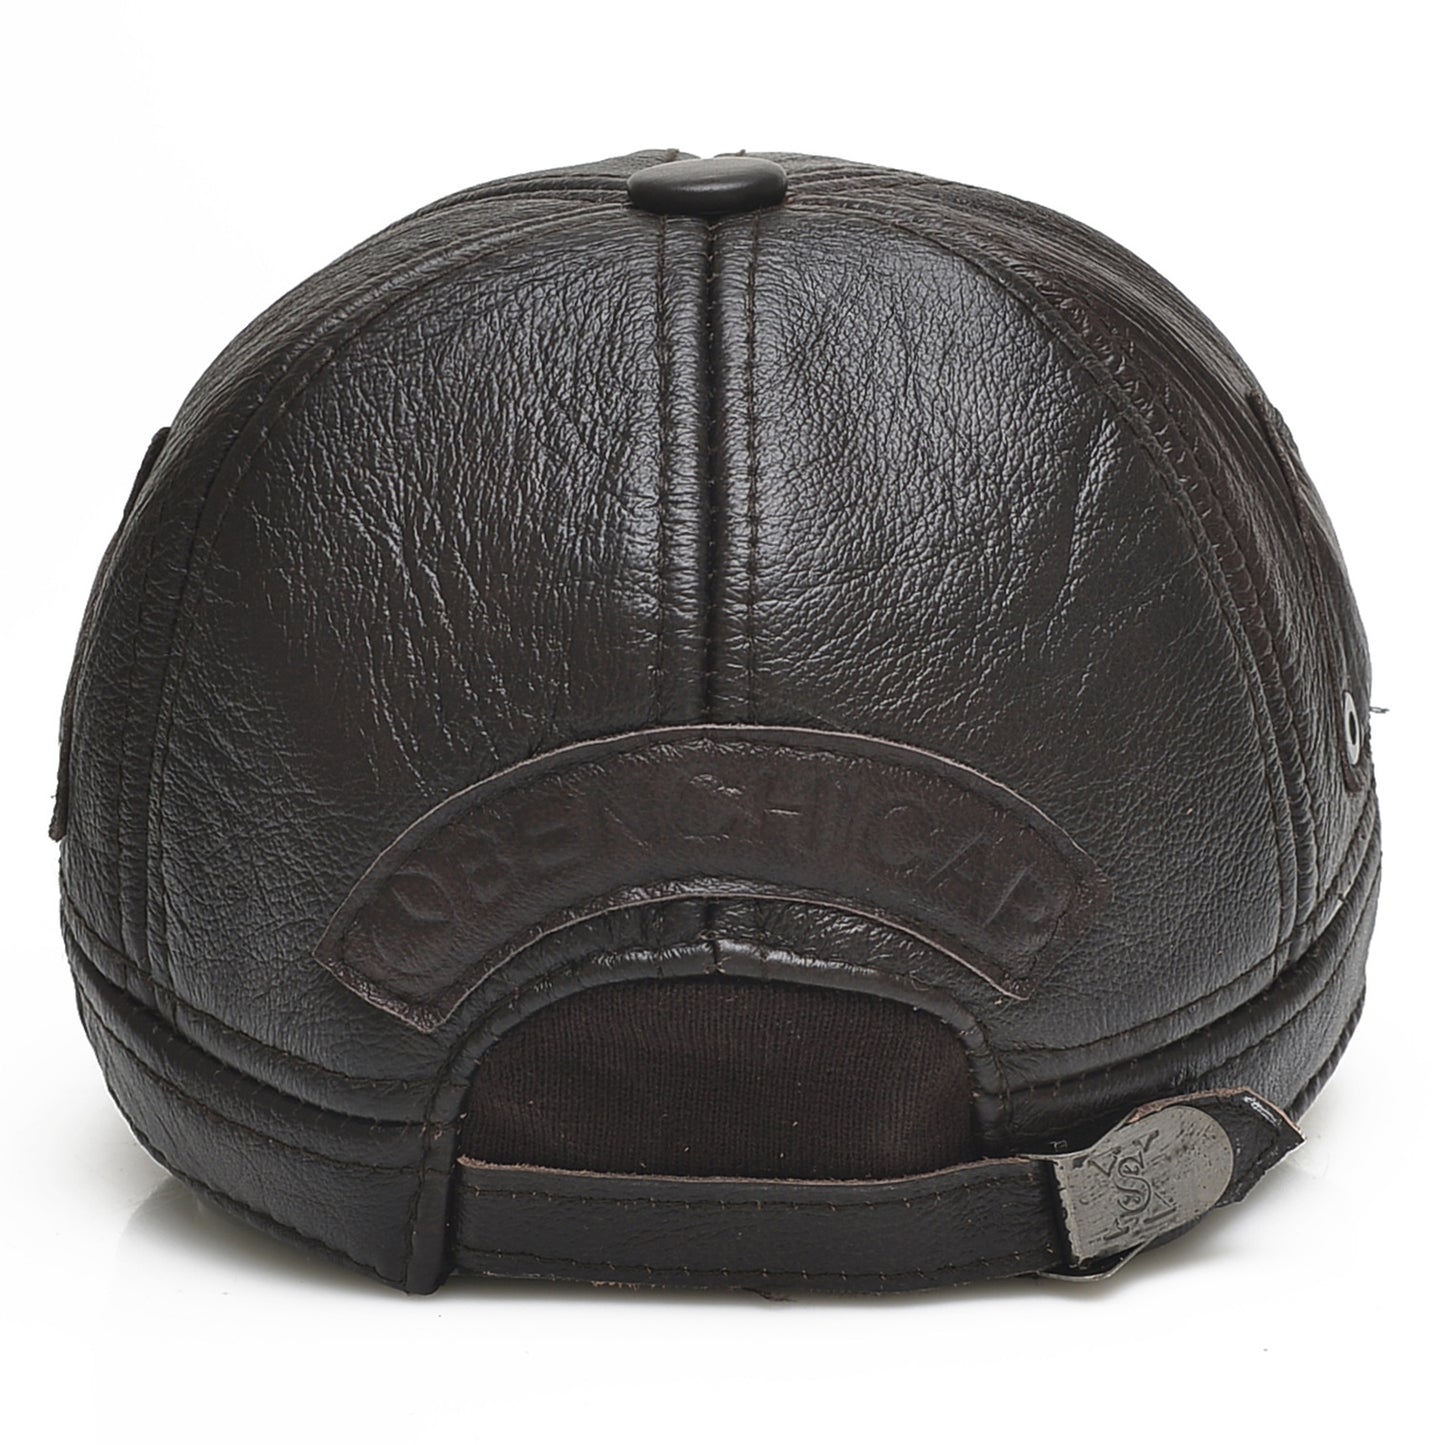 Men's winter warm padded baseball cap - myETYN